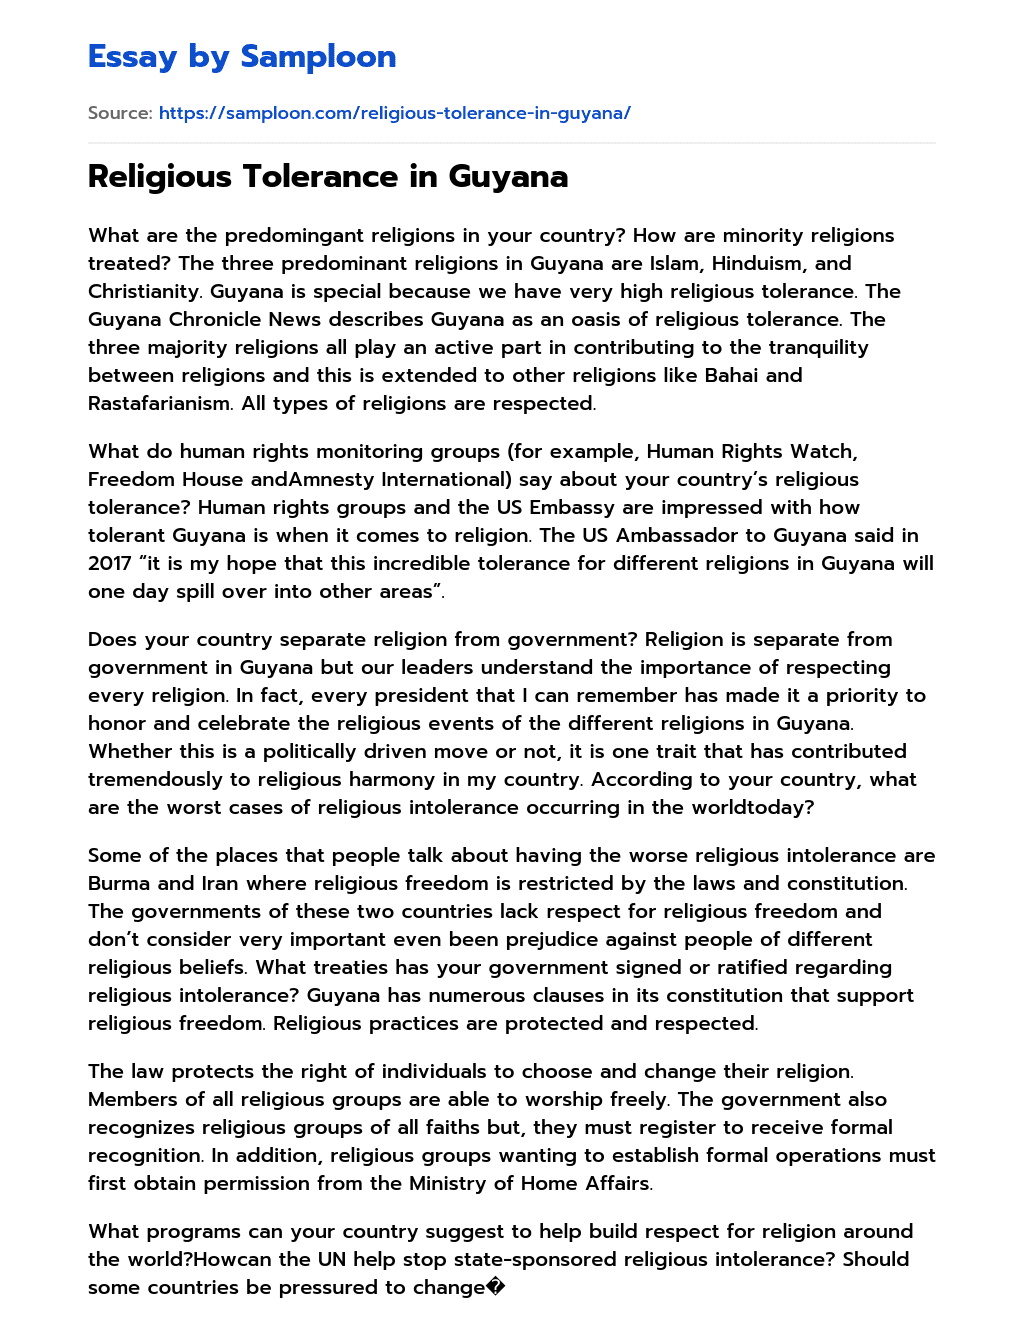 Religious Tolerance in Guyana essay